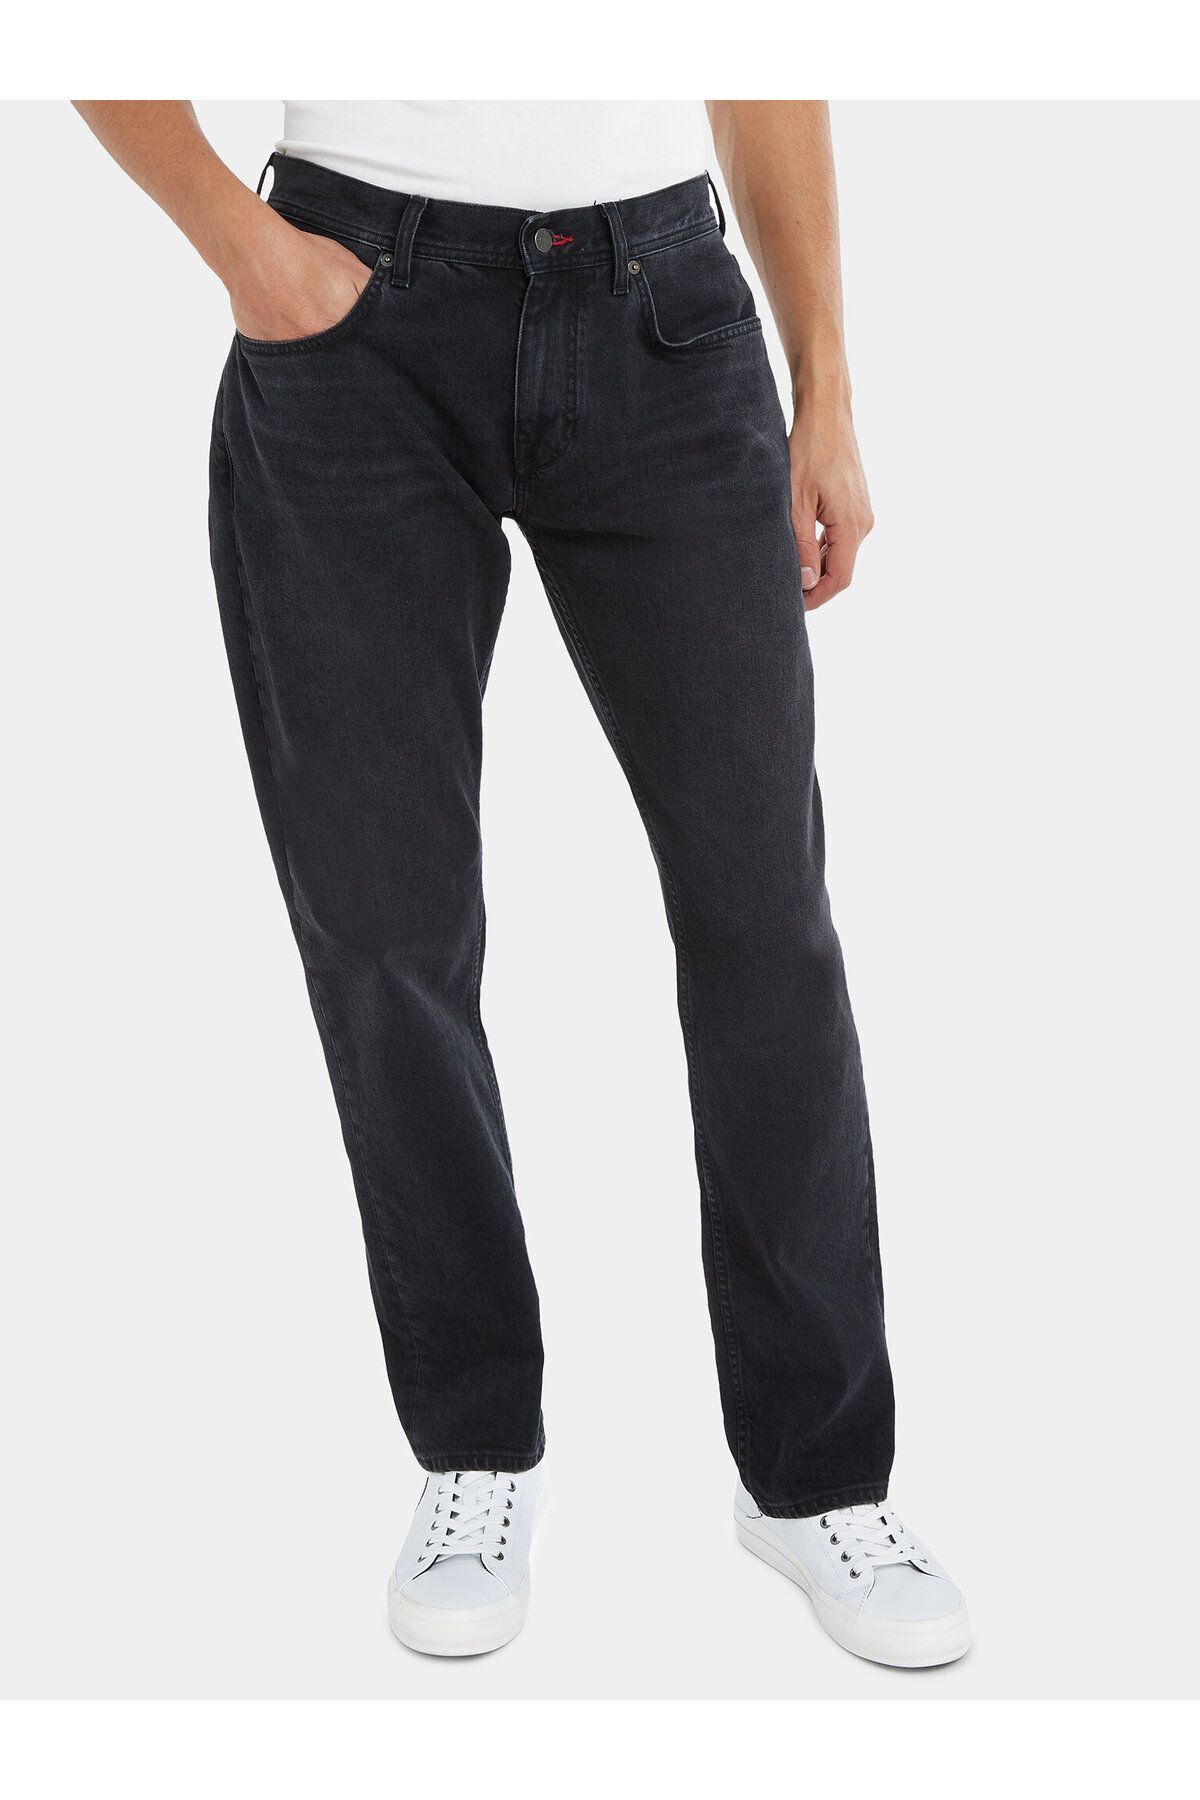 Tommy Hilfiger Erkek Denim Normal Belli Düz Model Günlük Kullanım Siyah Jeans MW0MW32080-1B1